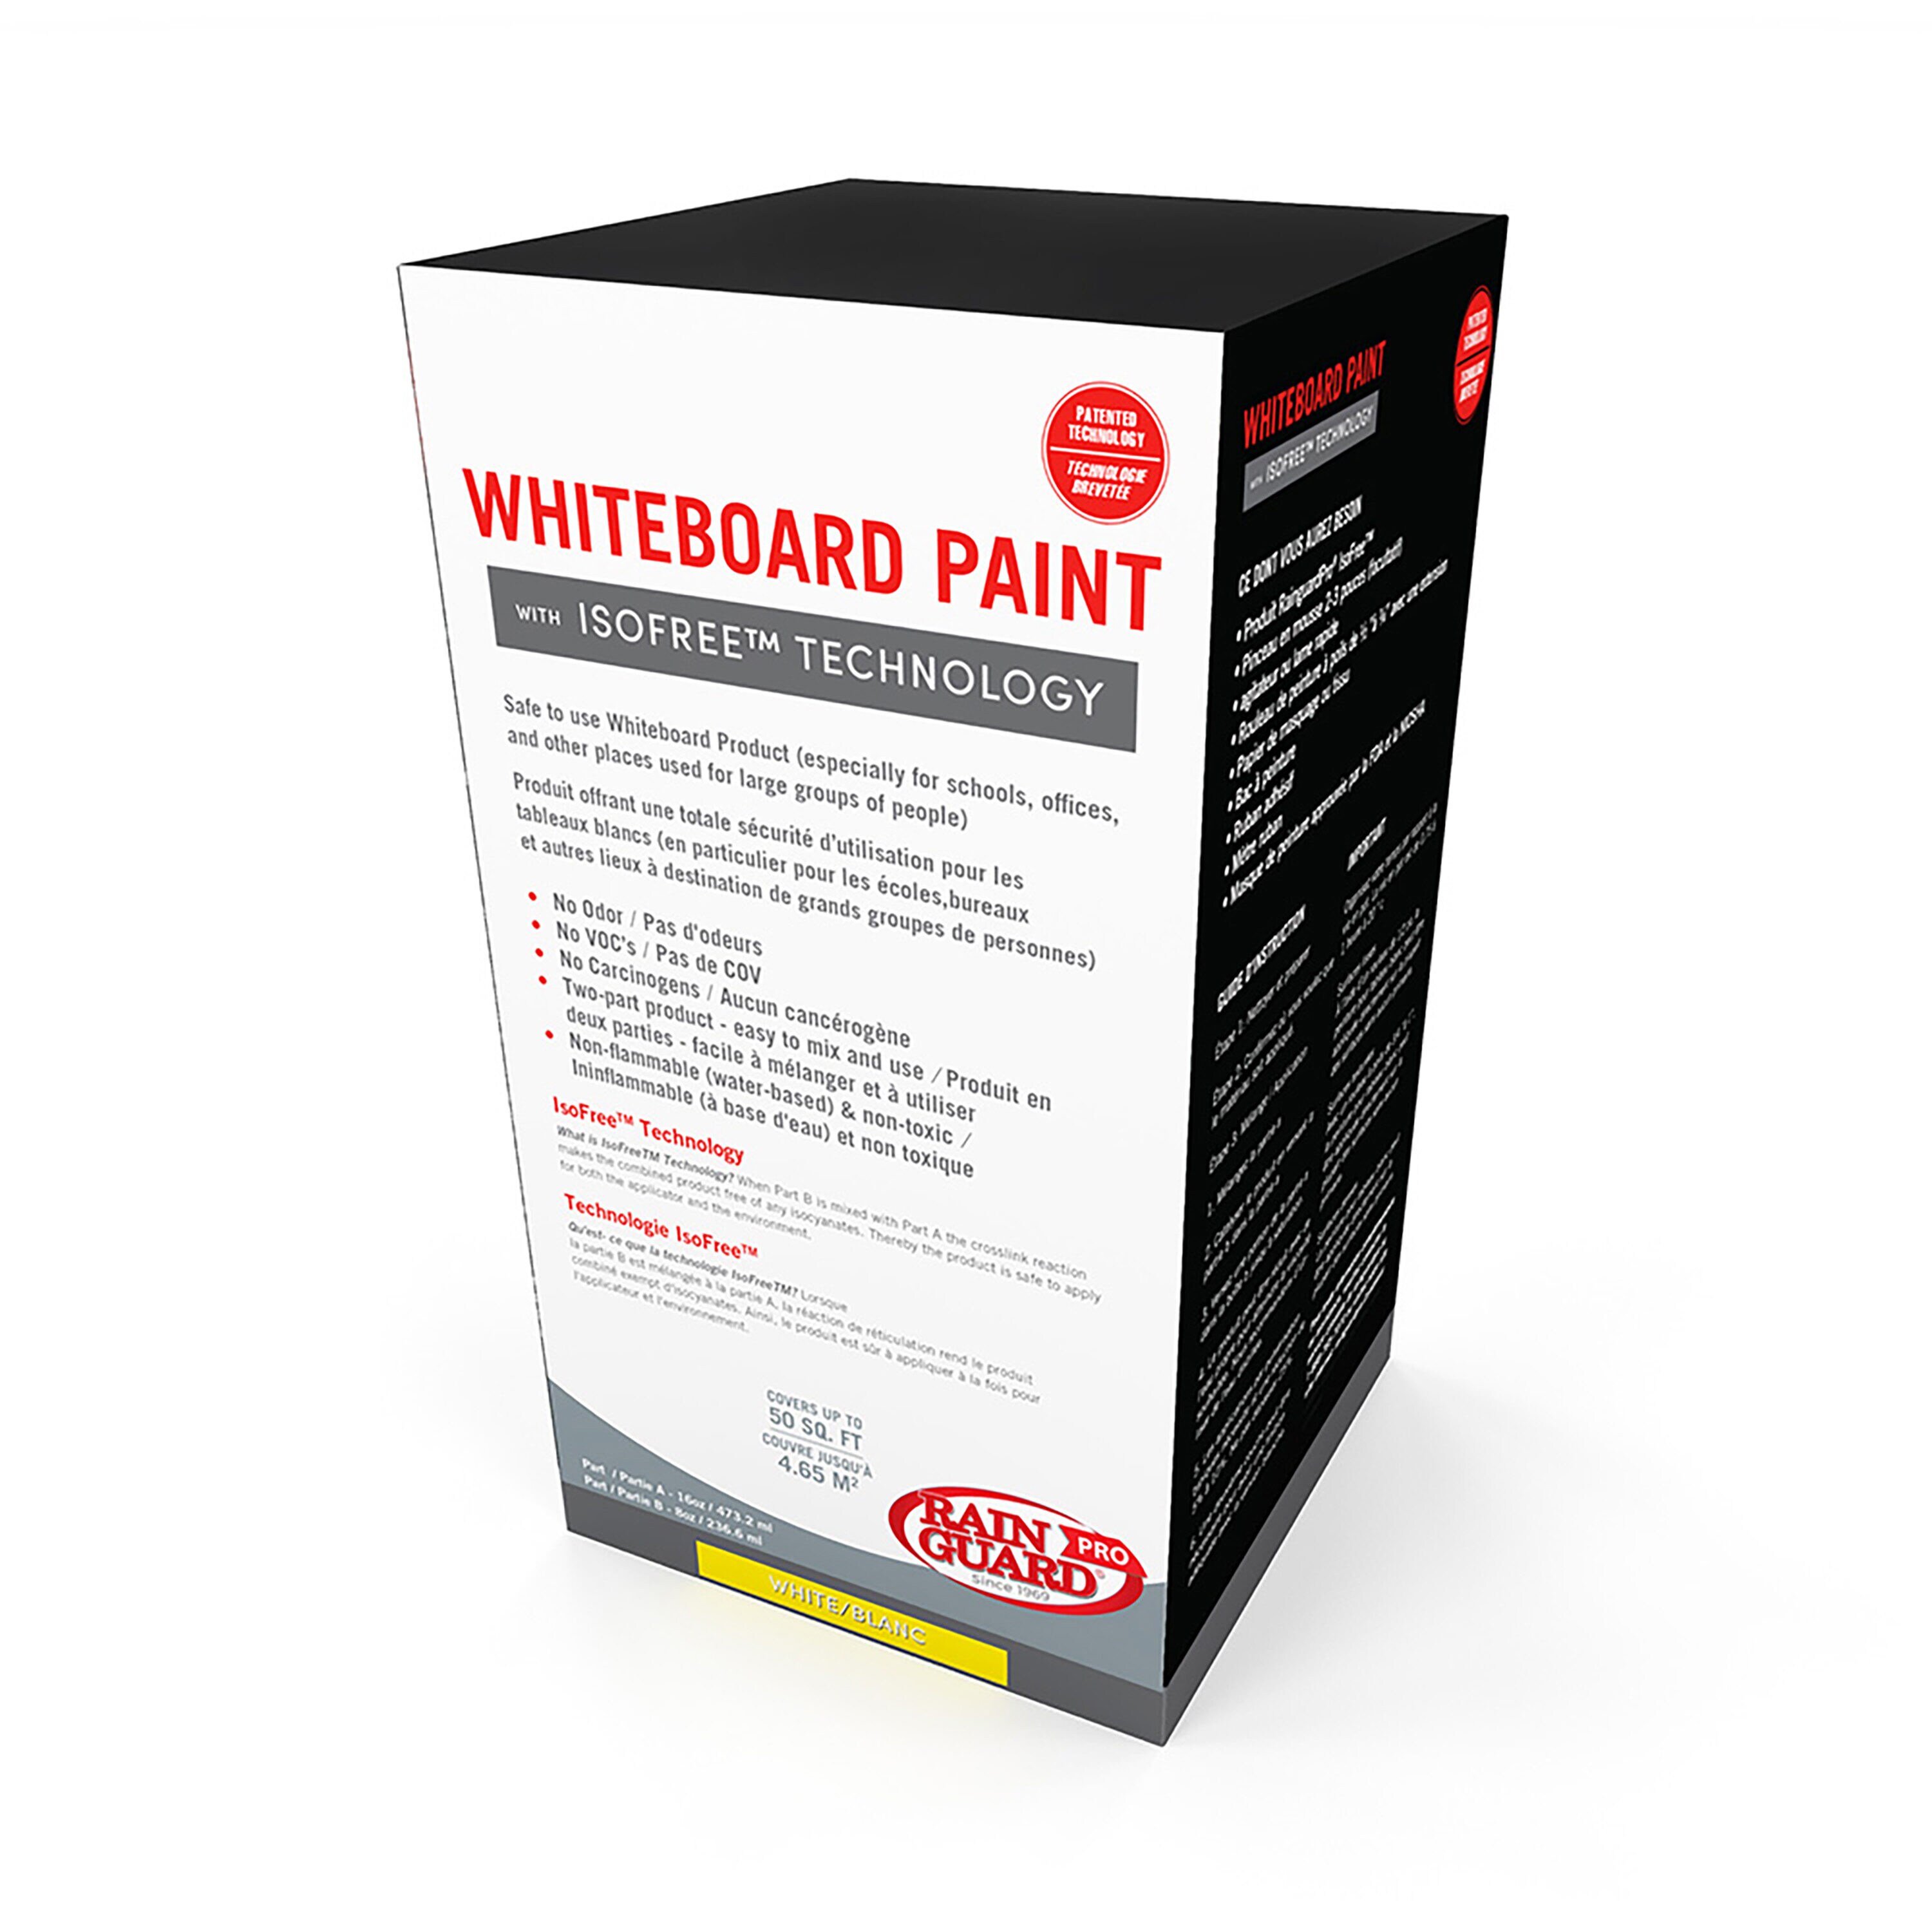 Rust-Oleum Specialty Hi-Gloss White Dry Erase Paint Kit 16 oz